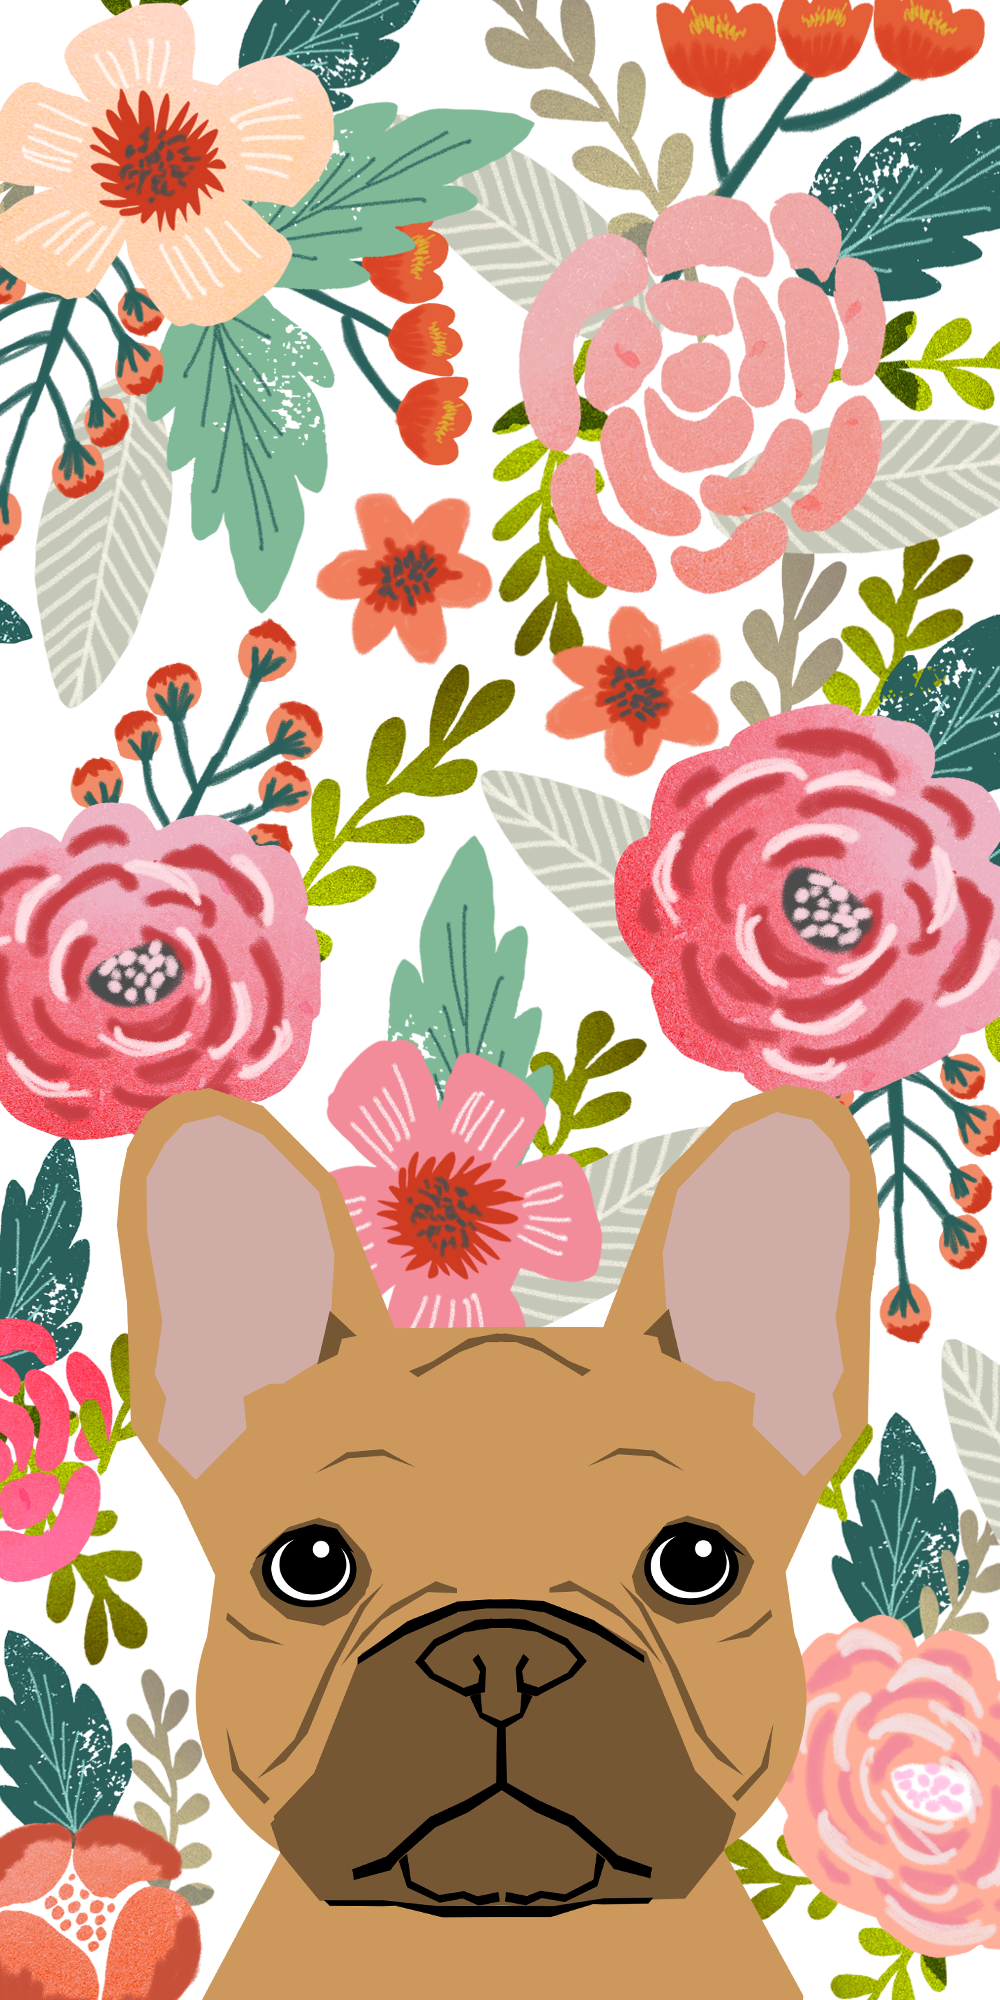 CASETiFY #floral #bulldog #animals #dogs #cute #art #wallpaper #ideas. Art wallpaper, Floral wallpaper, Cute wallpaper